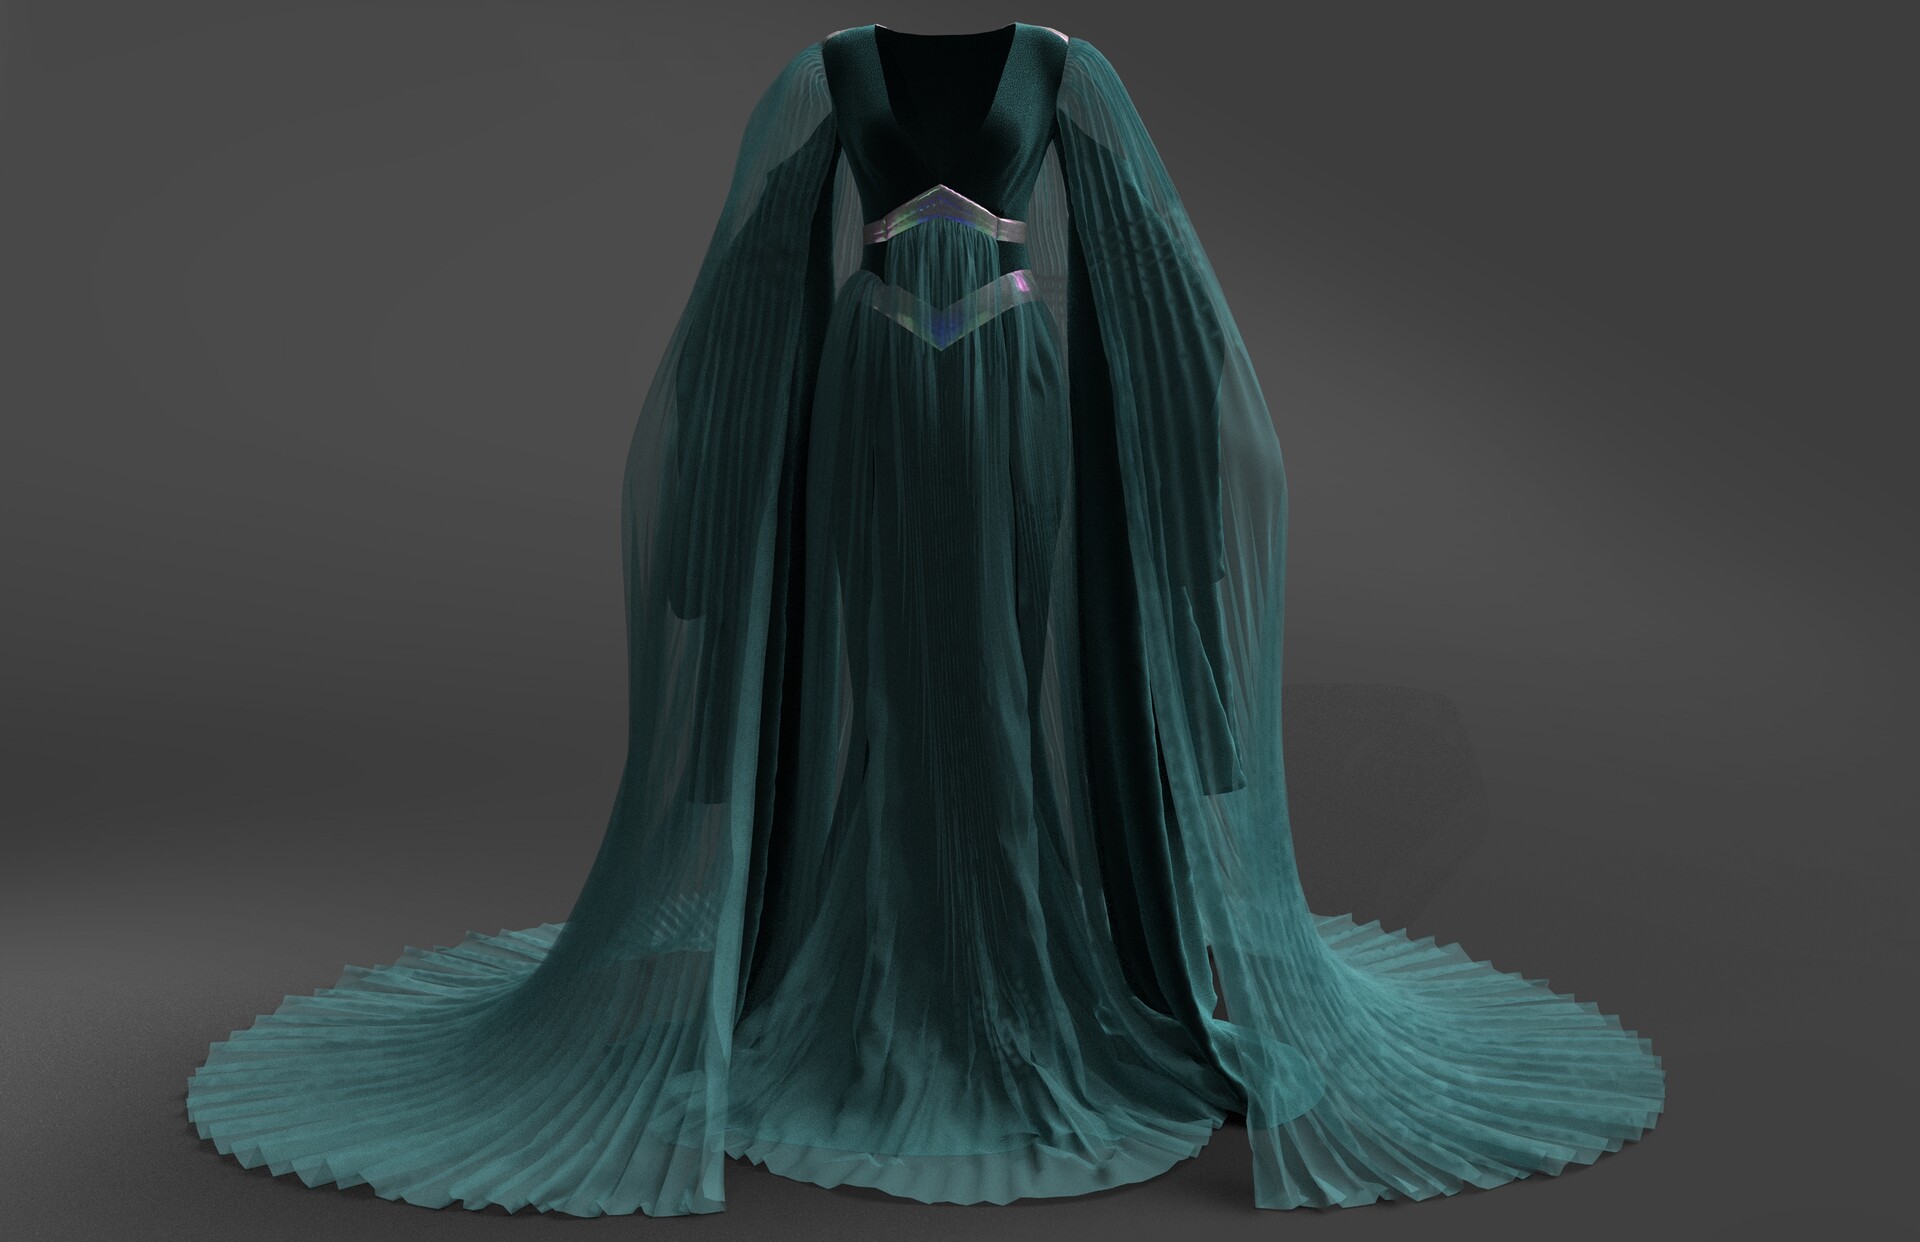 ArtStation - Fantasy Gown